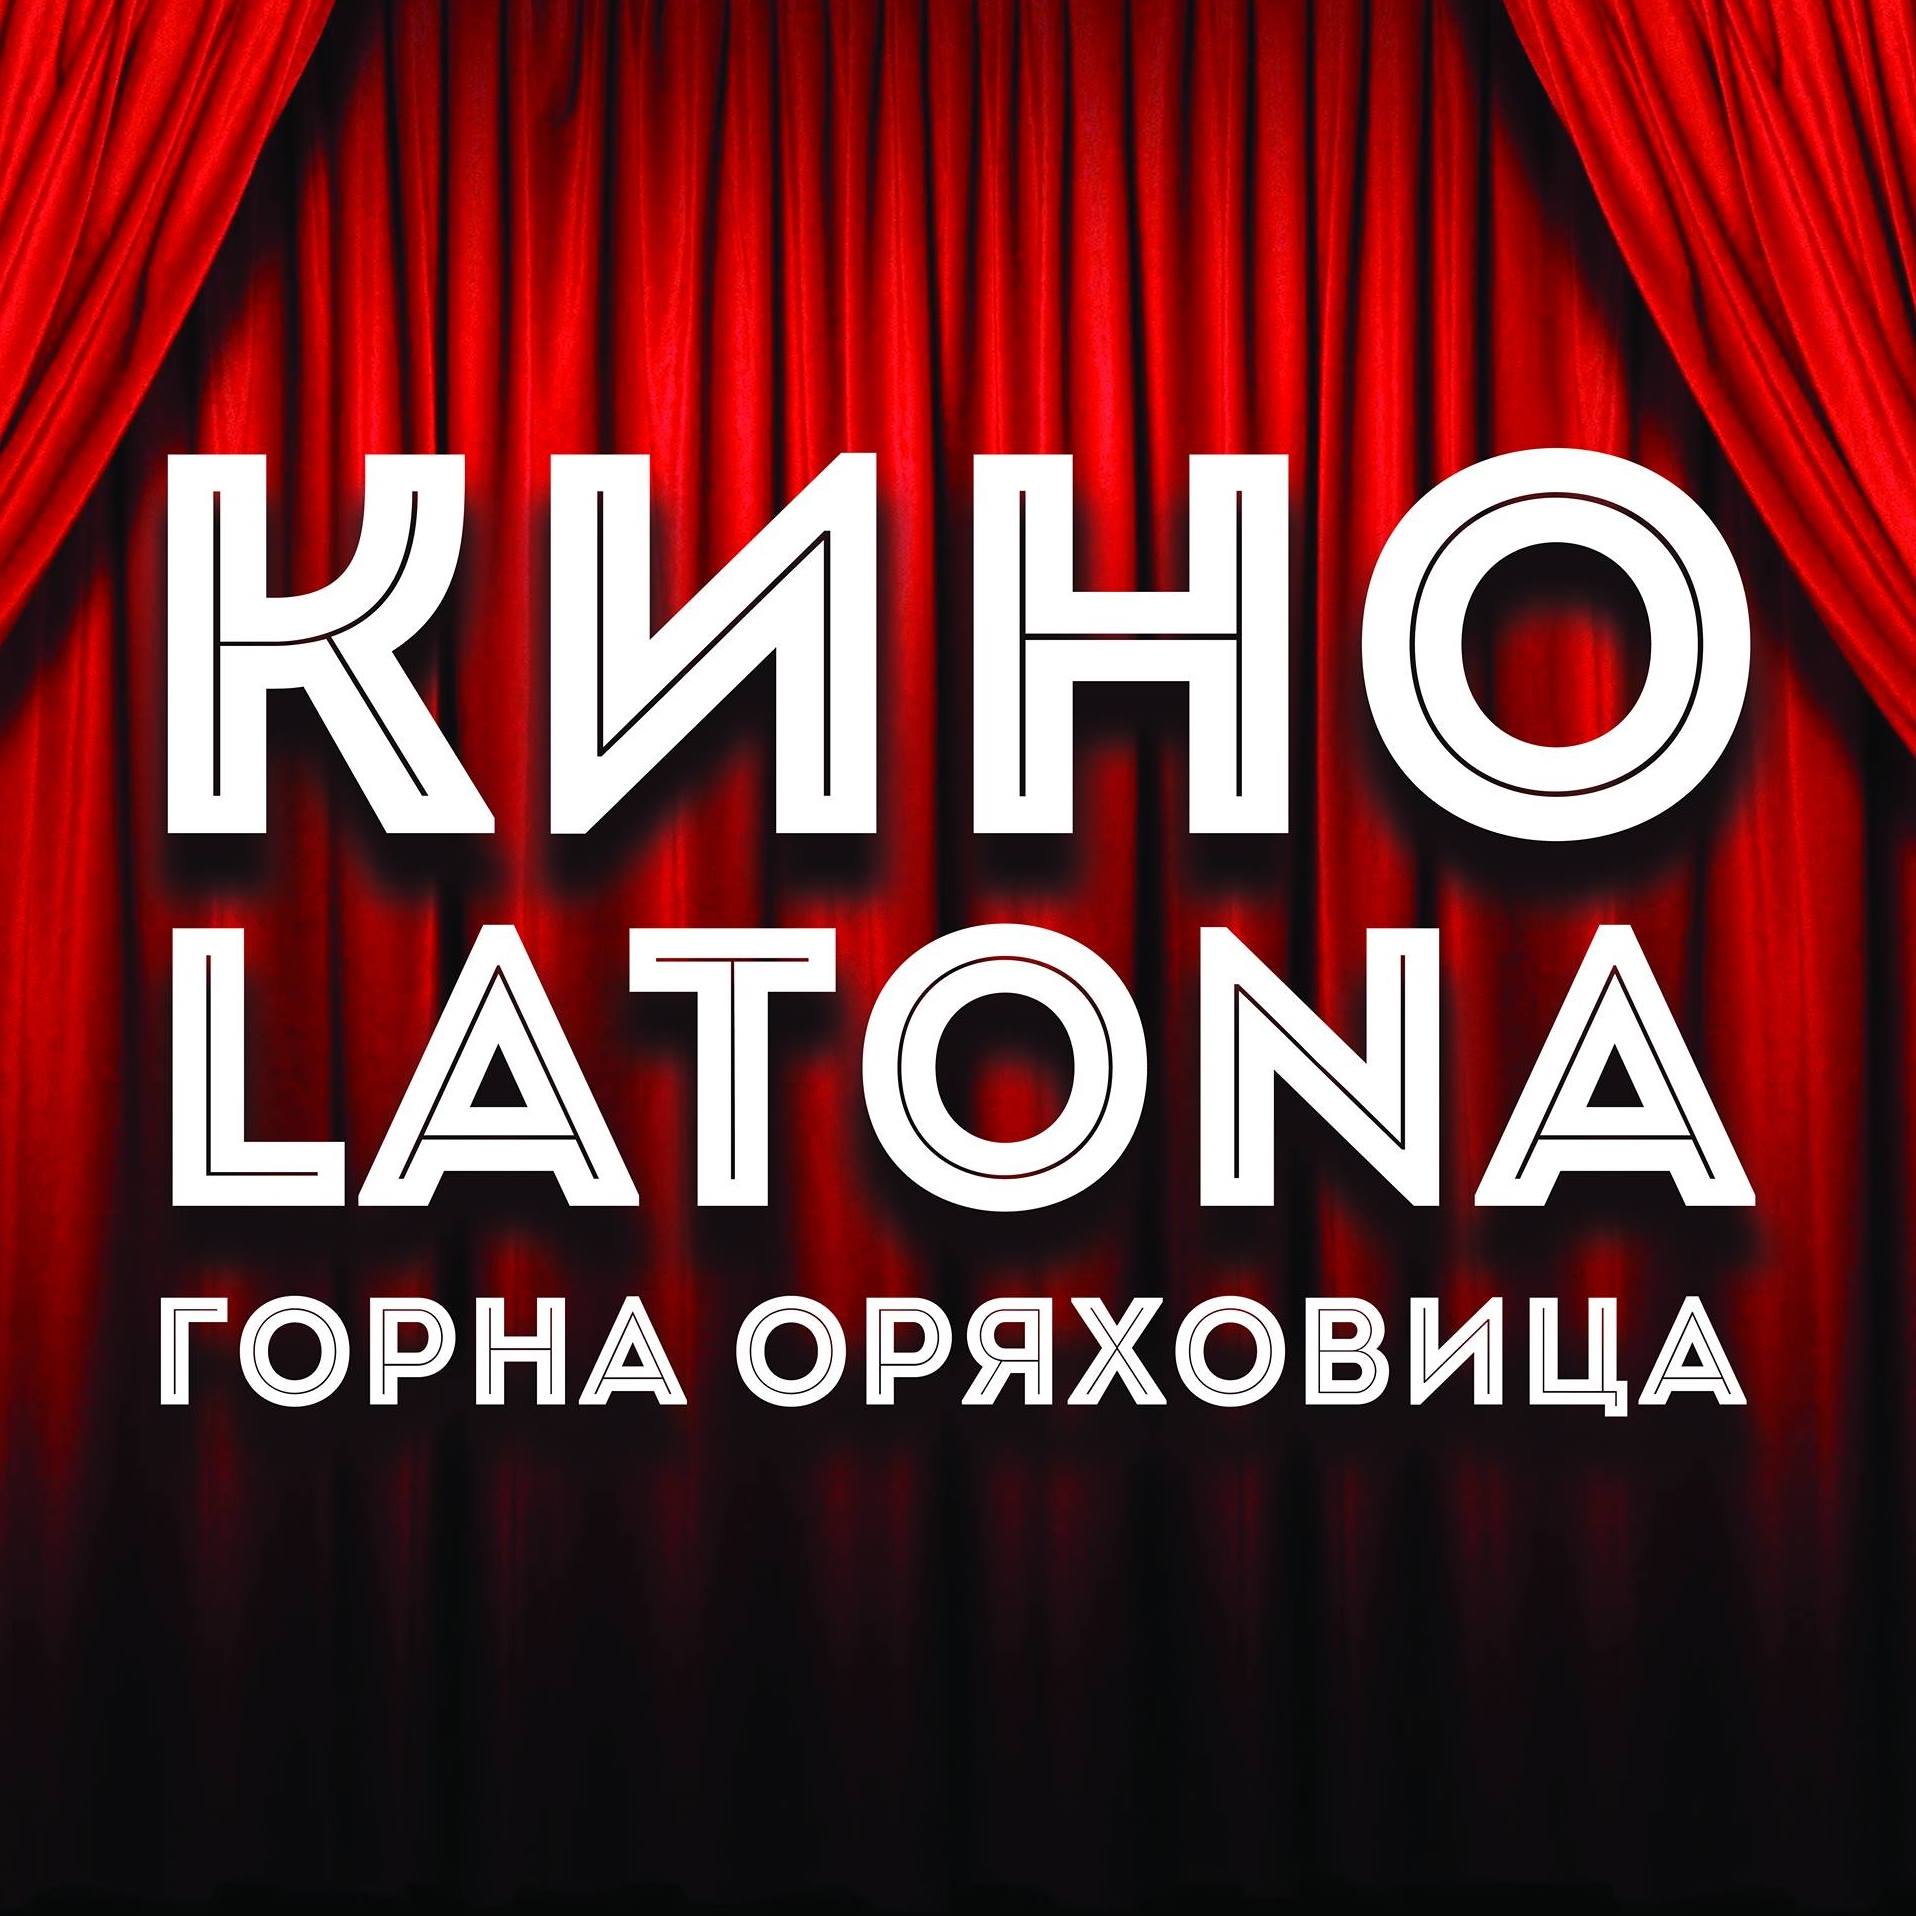 Latona Cinema Горна Оряховица: Кино програма - 22-28 април 2022